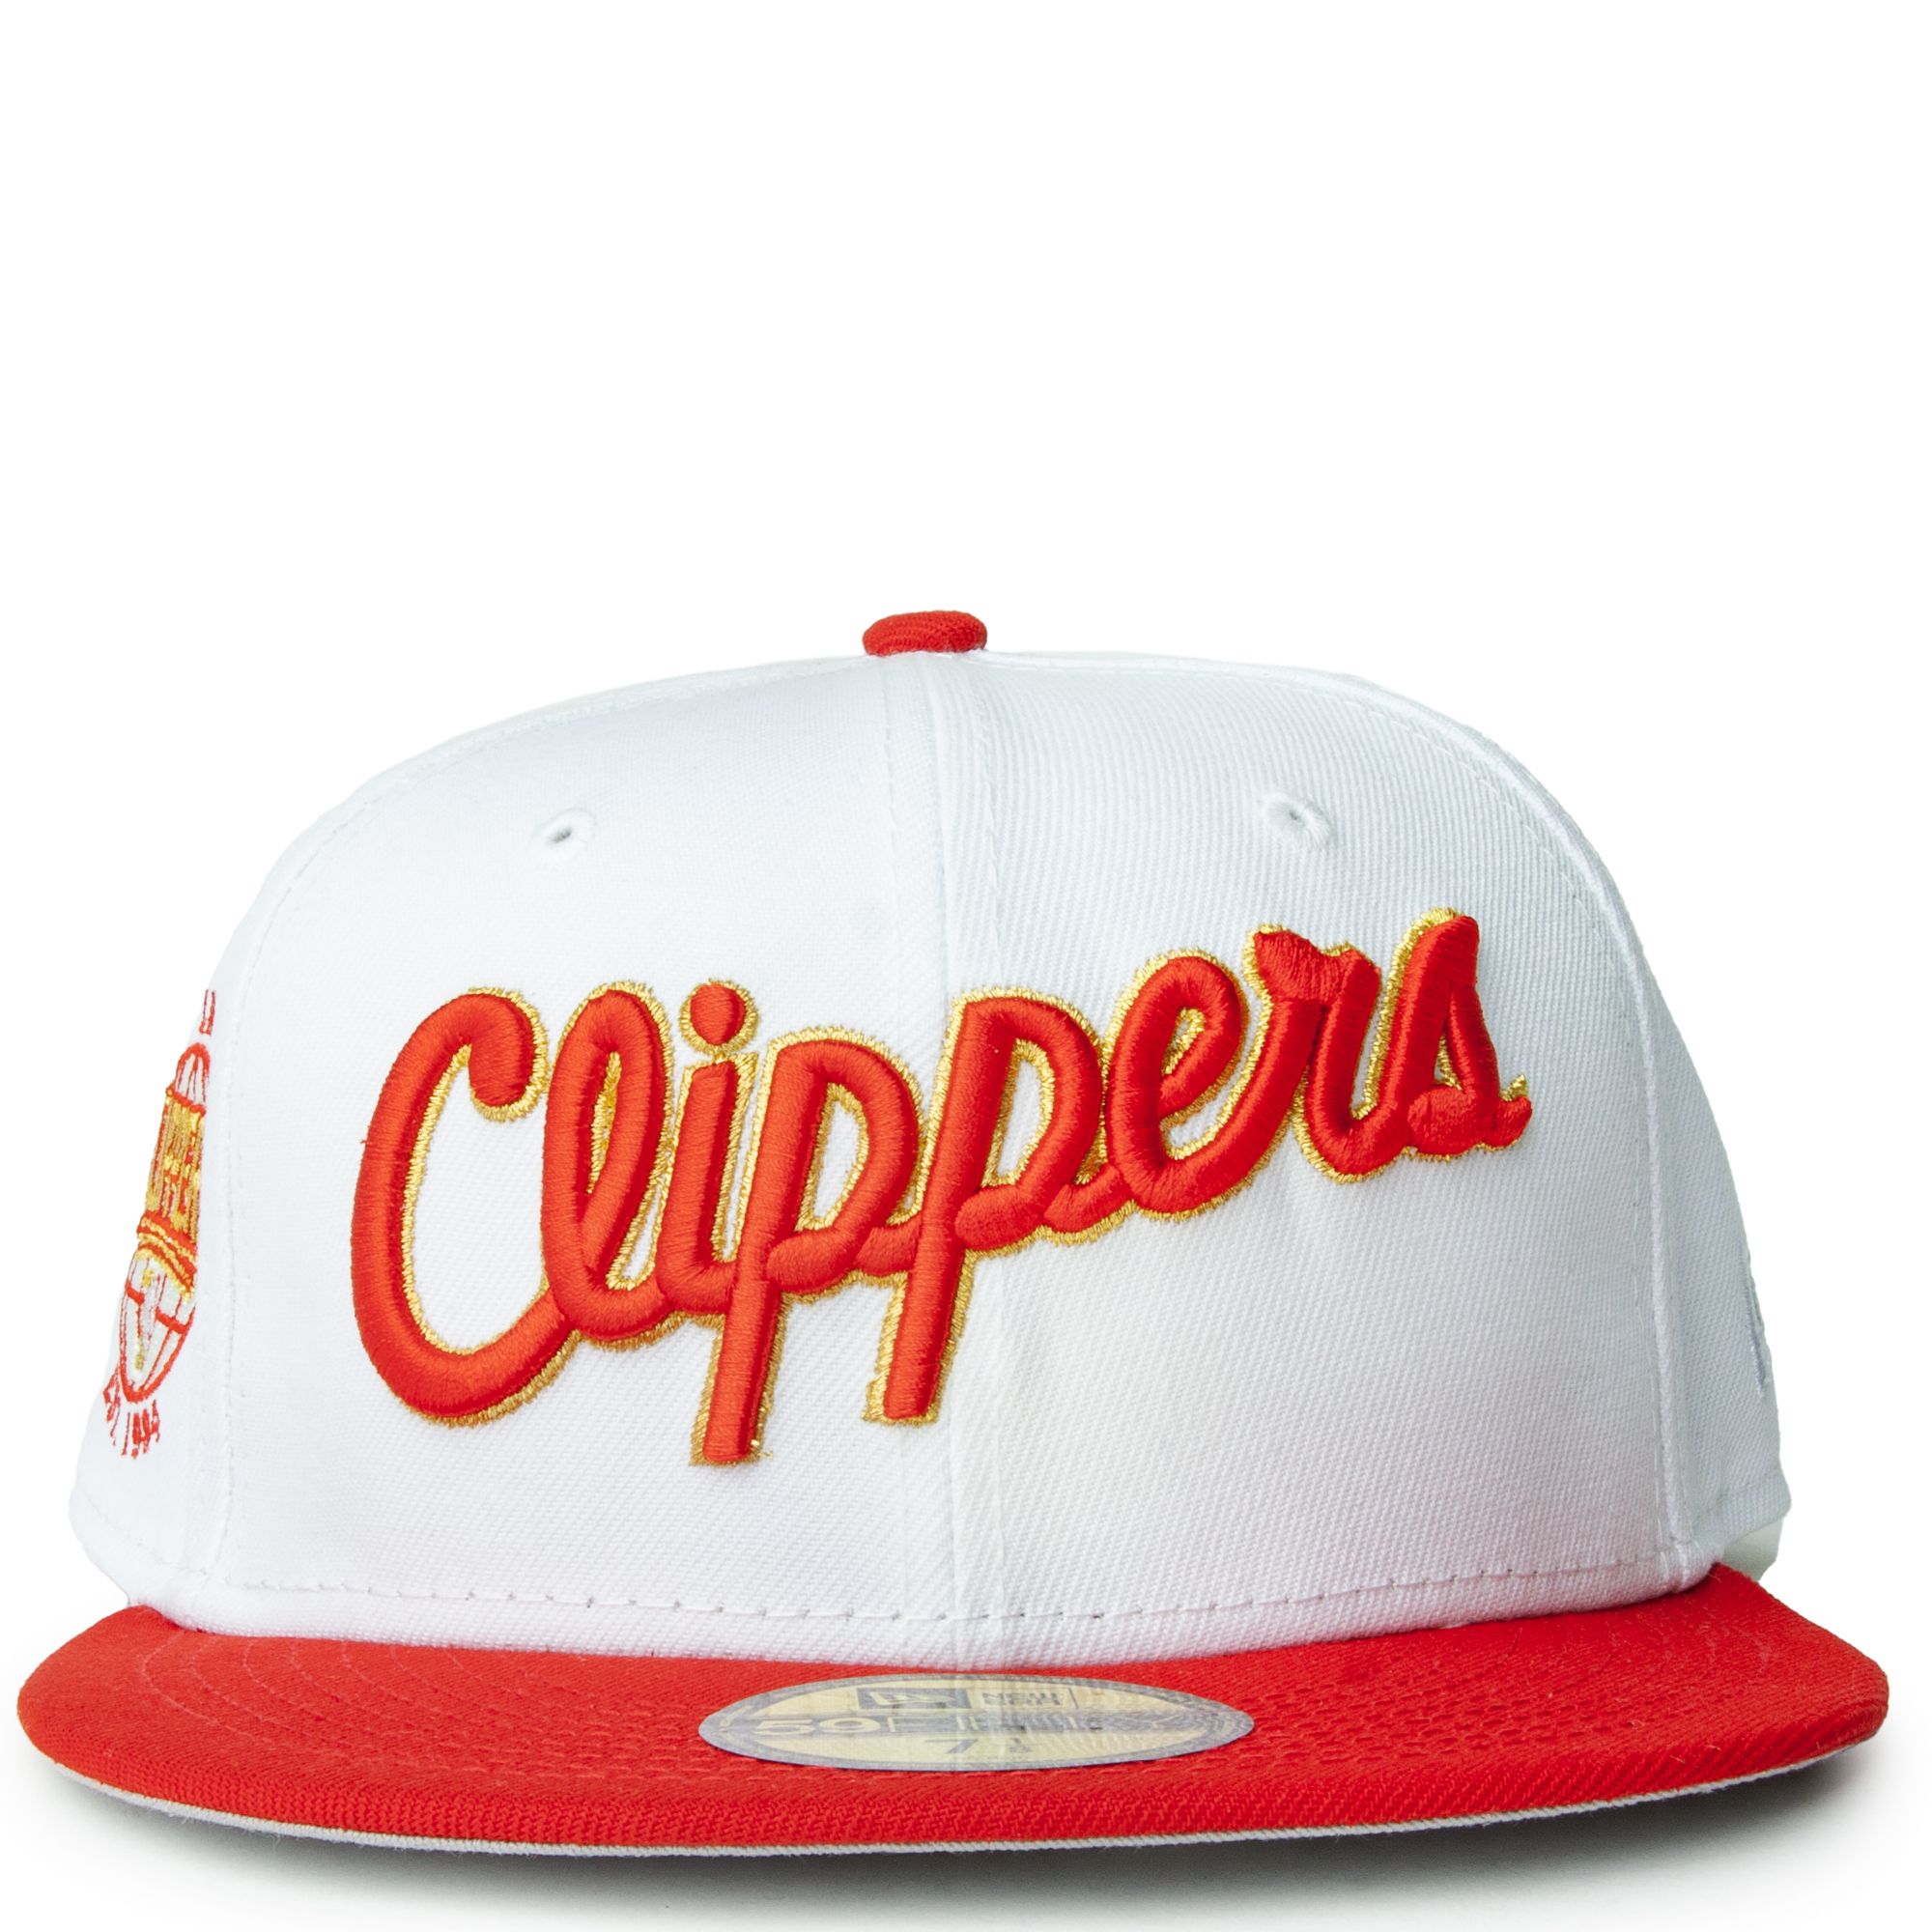 La Clippers Girls New Era Clippers T-Shirt